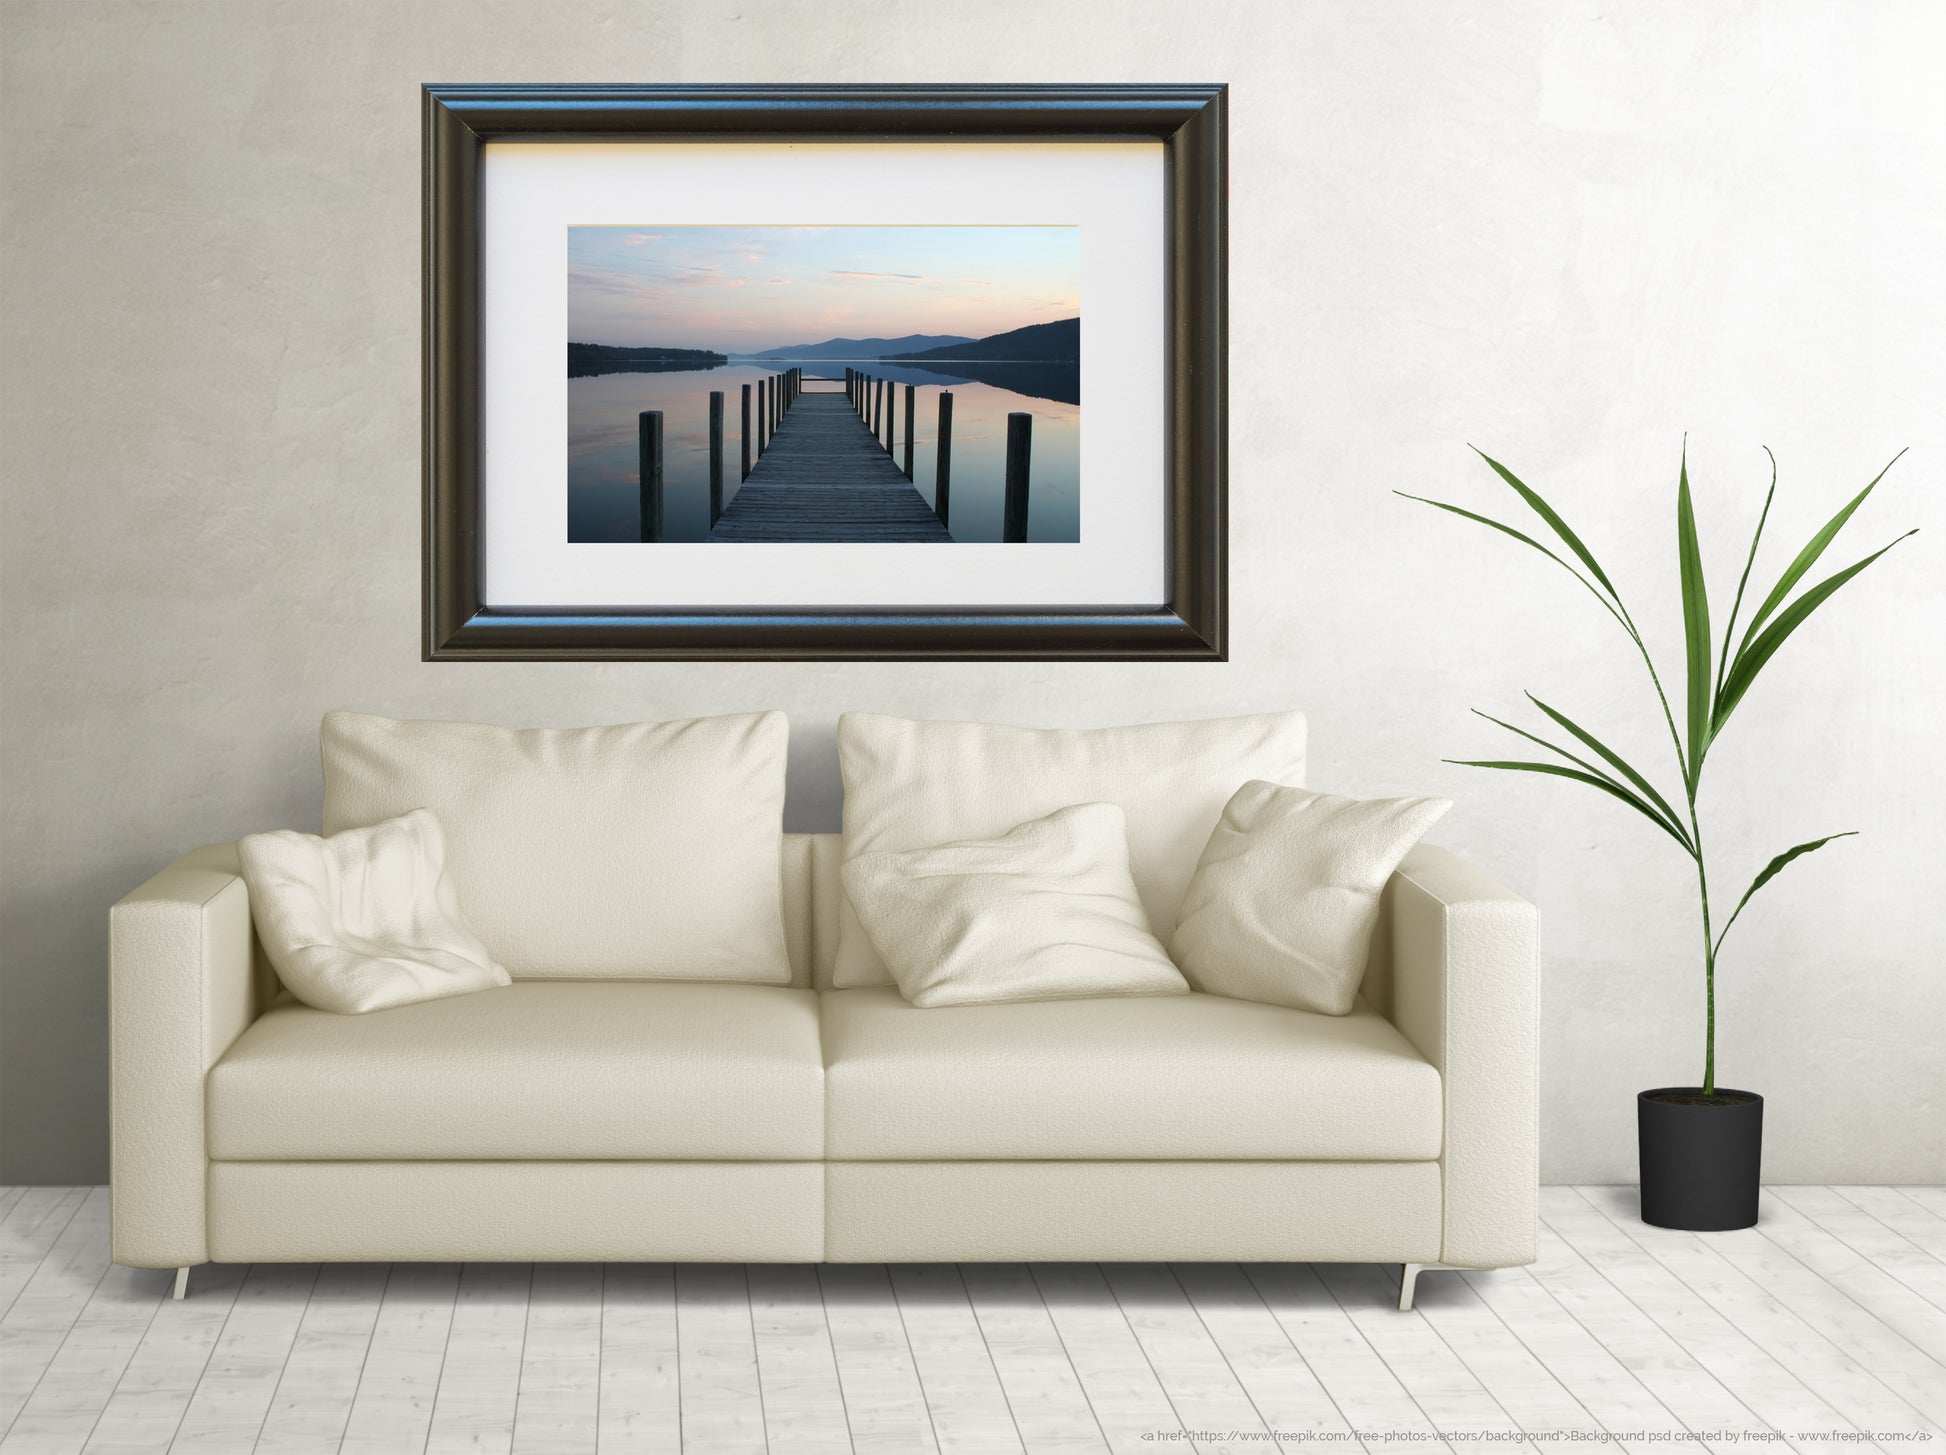 Lake George Docks at Sunrise Fine Art Photo or Canvas Print